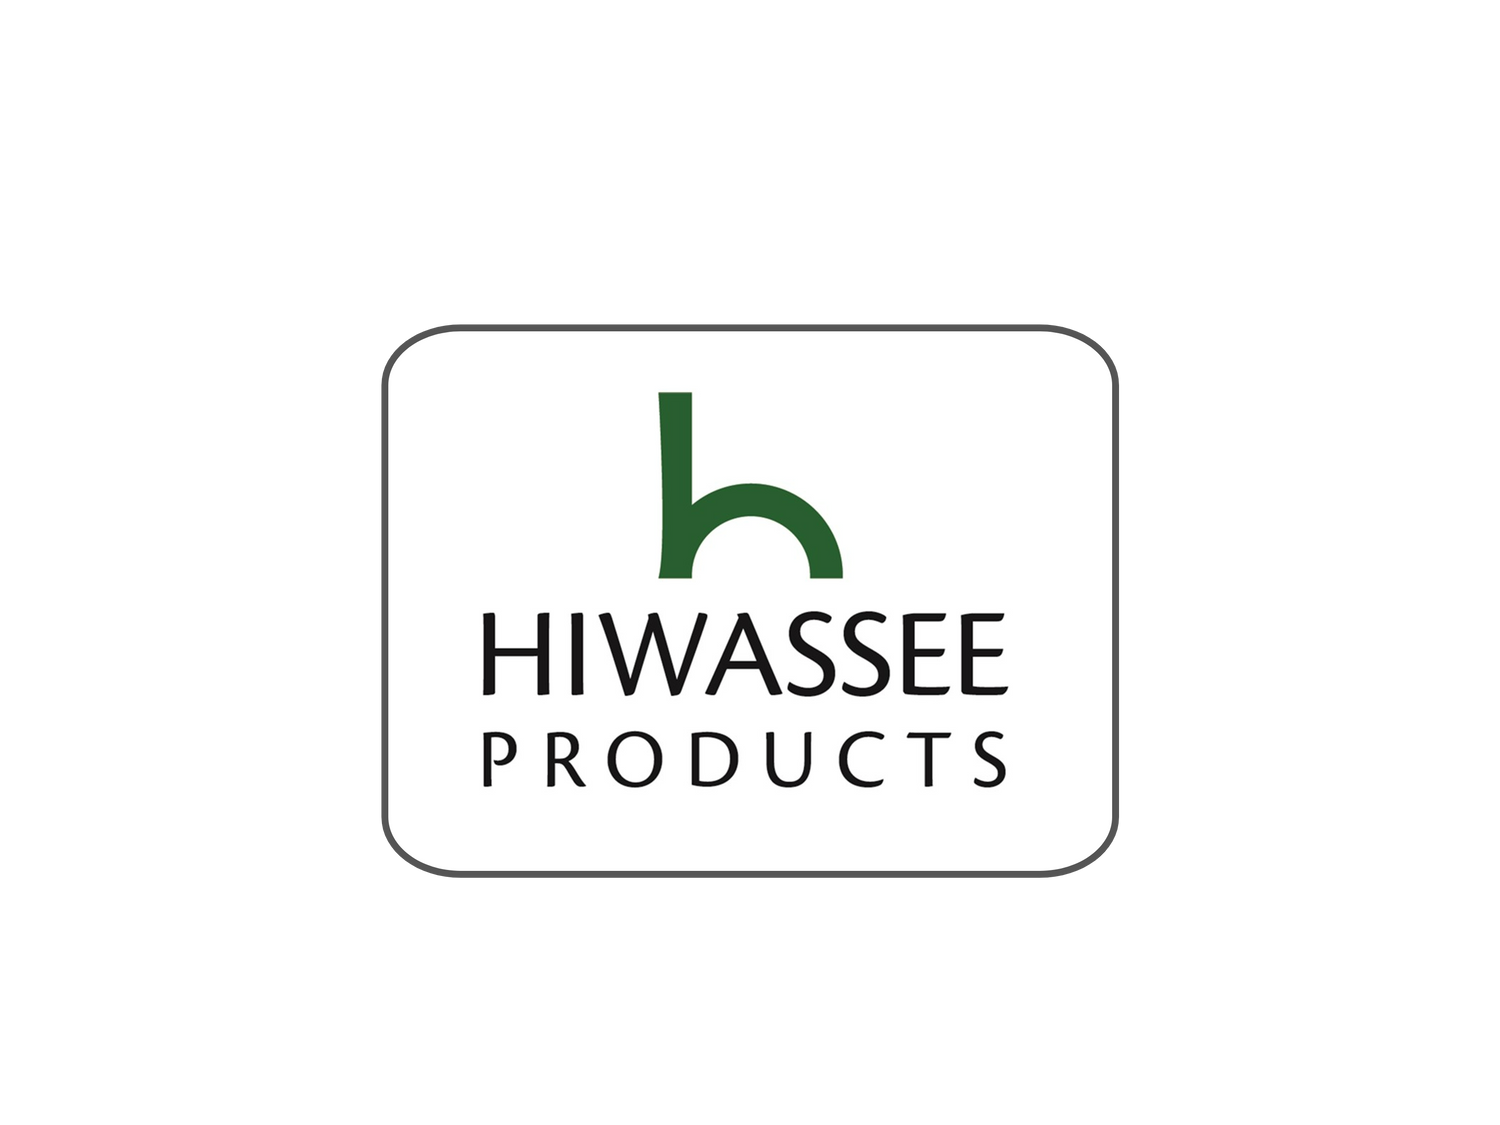 Hiwassee Products logo 